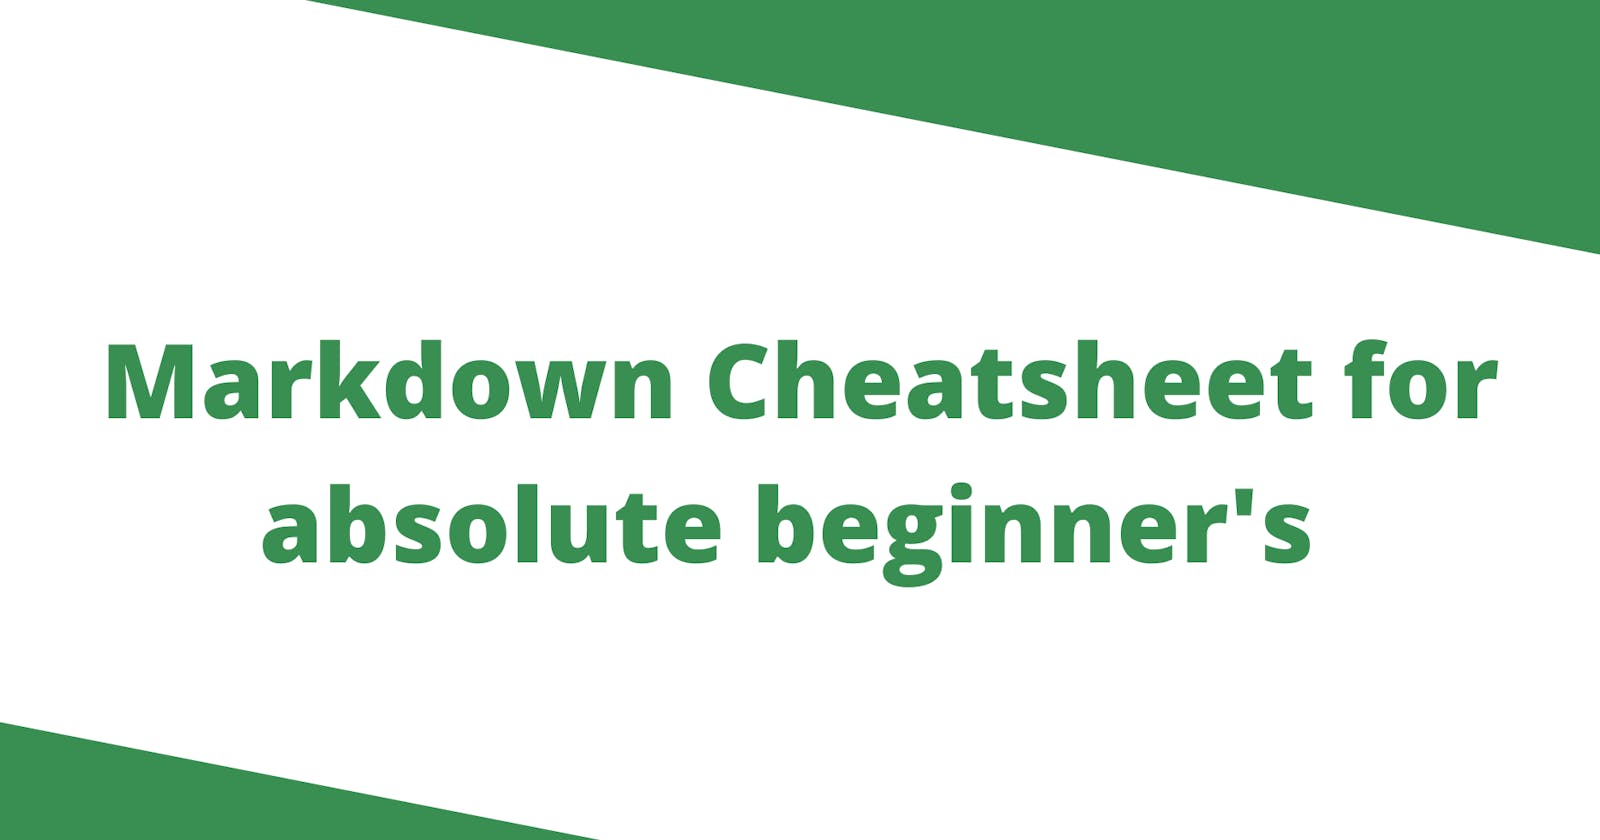 Markdown Cheatsheet for absolute beginner's